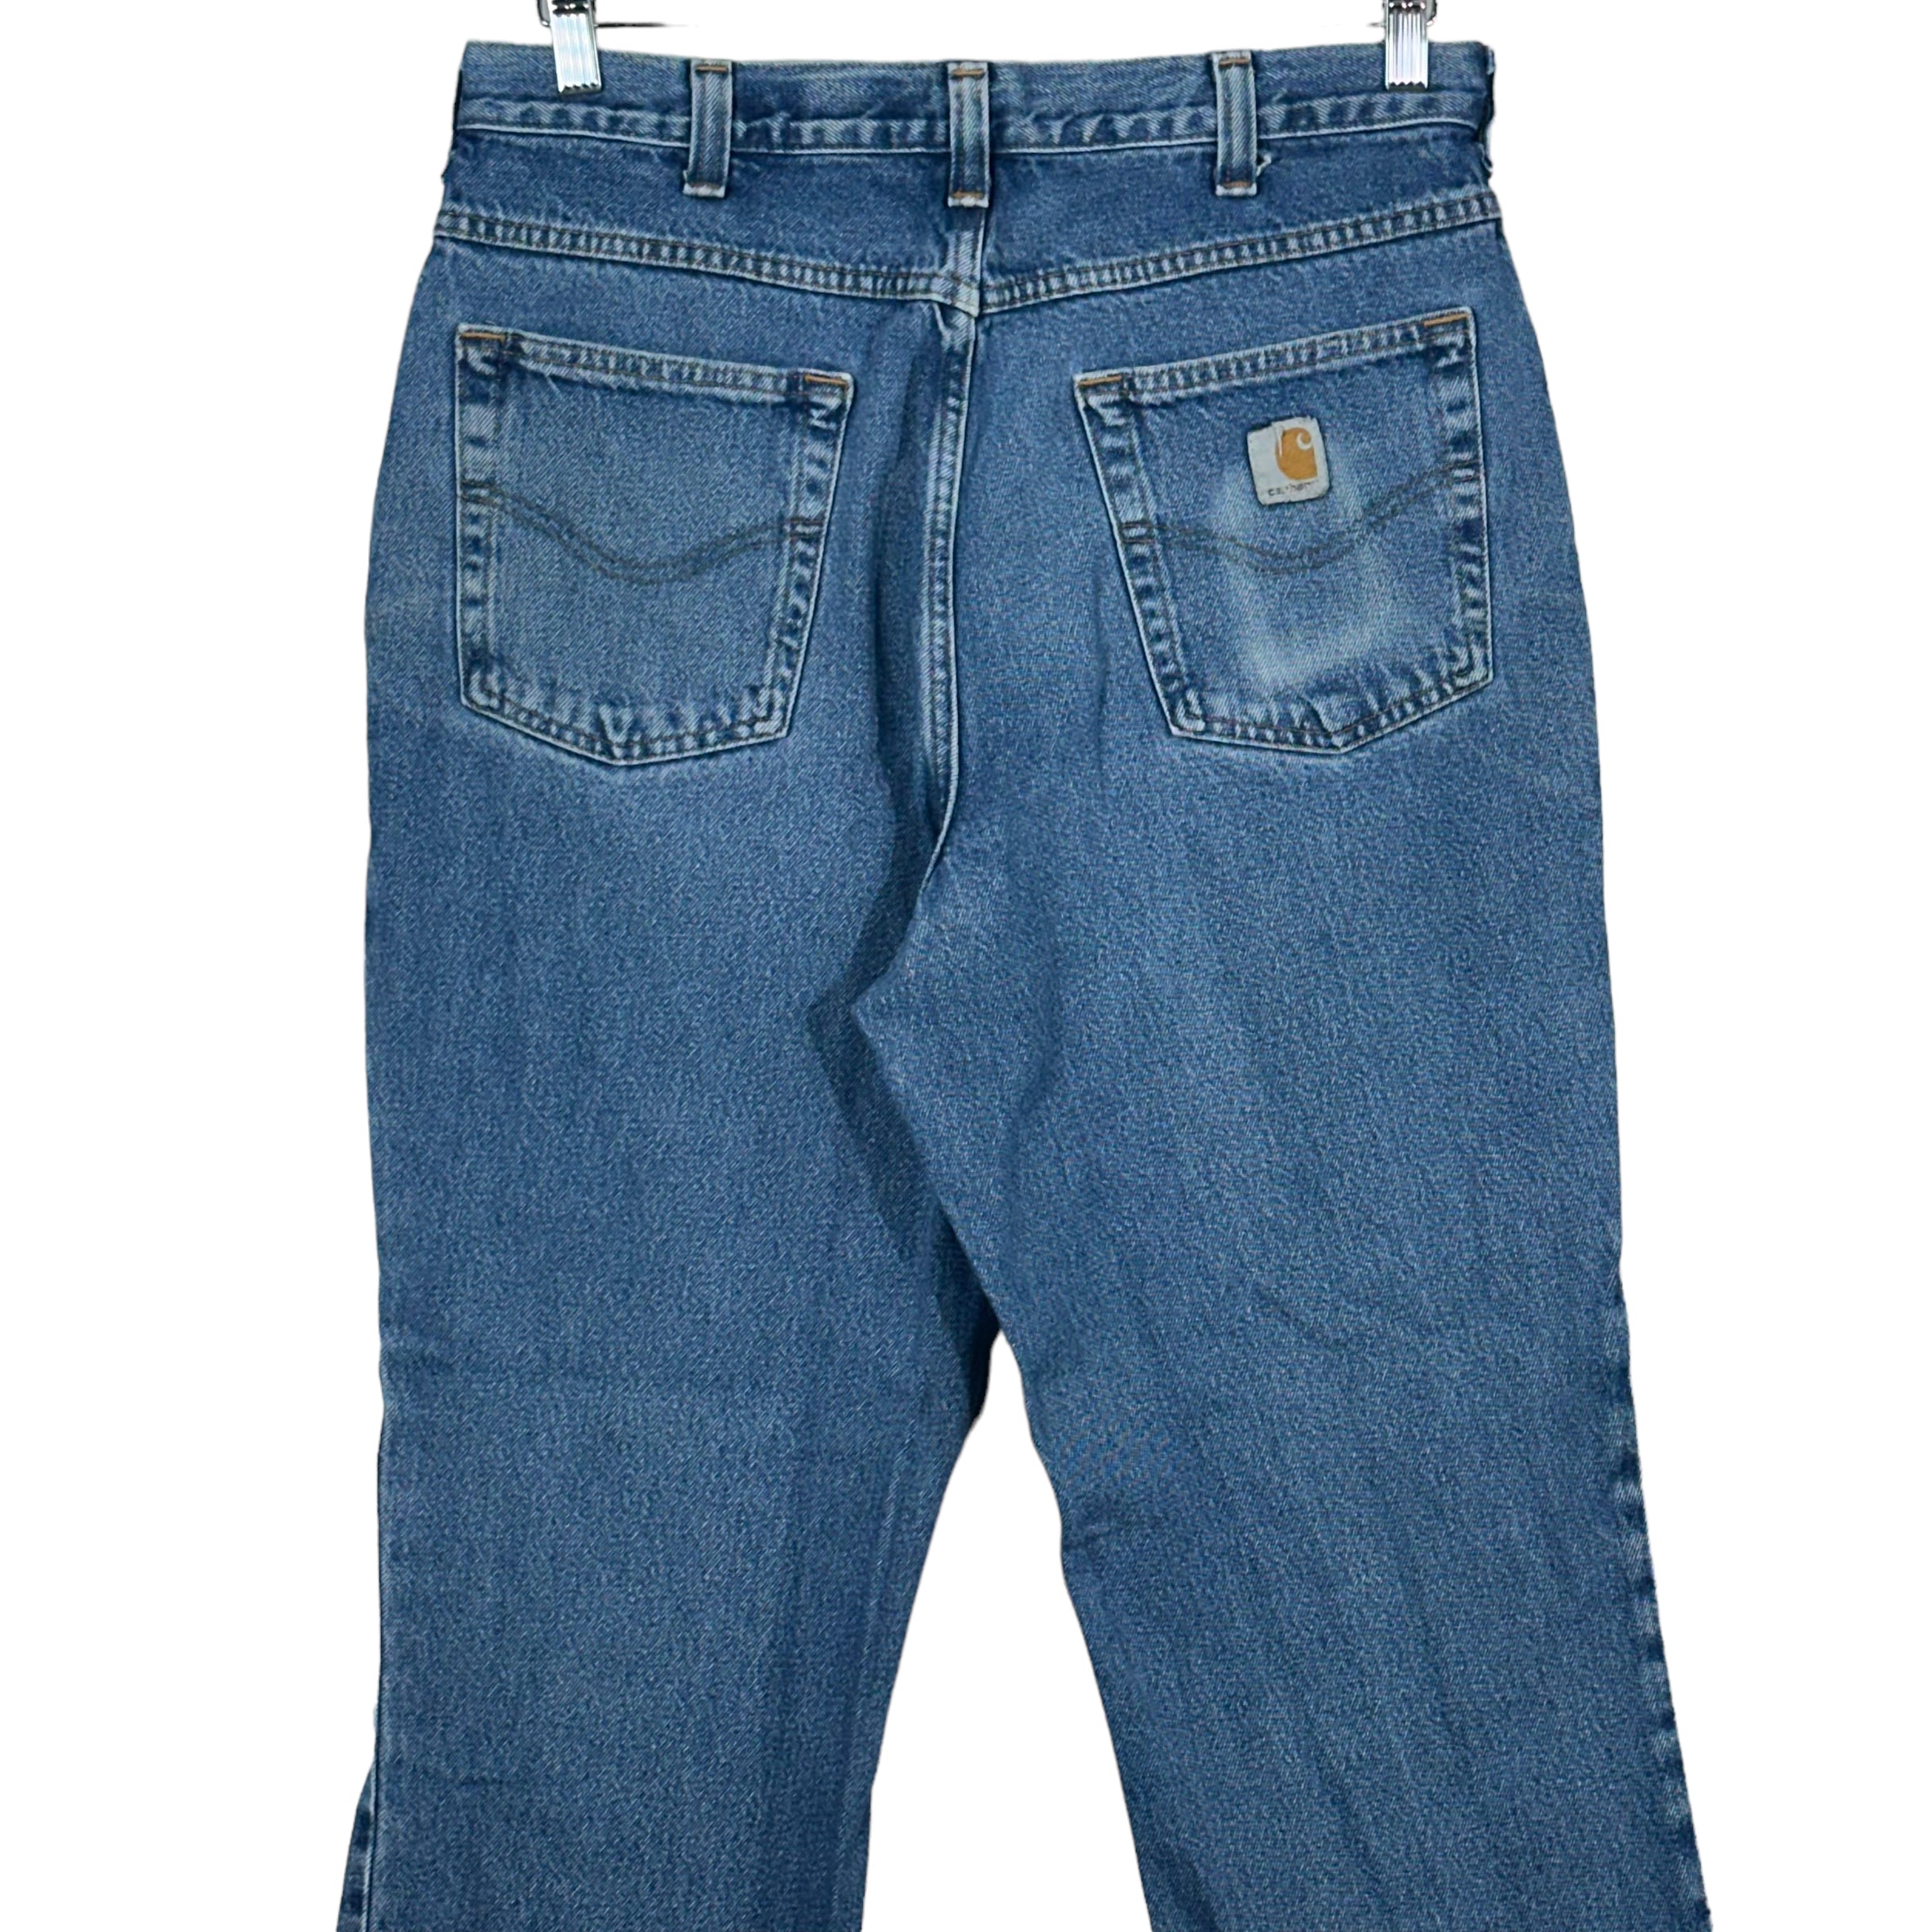 Vintage Carhartt Medium Wash Straight Leg Work Jeans